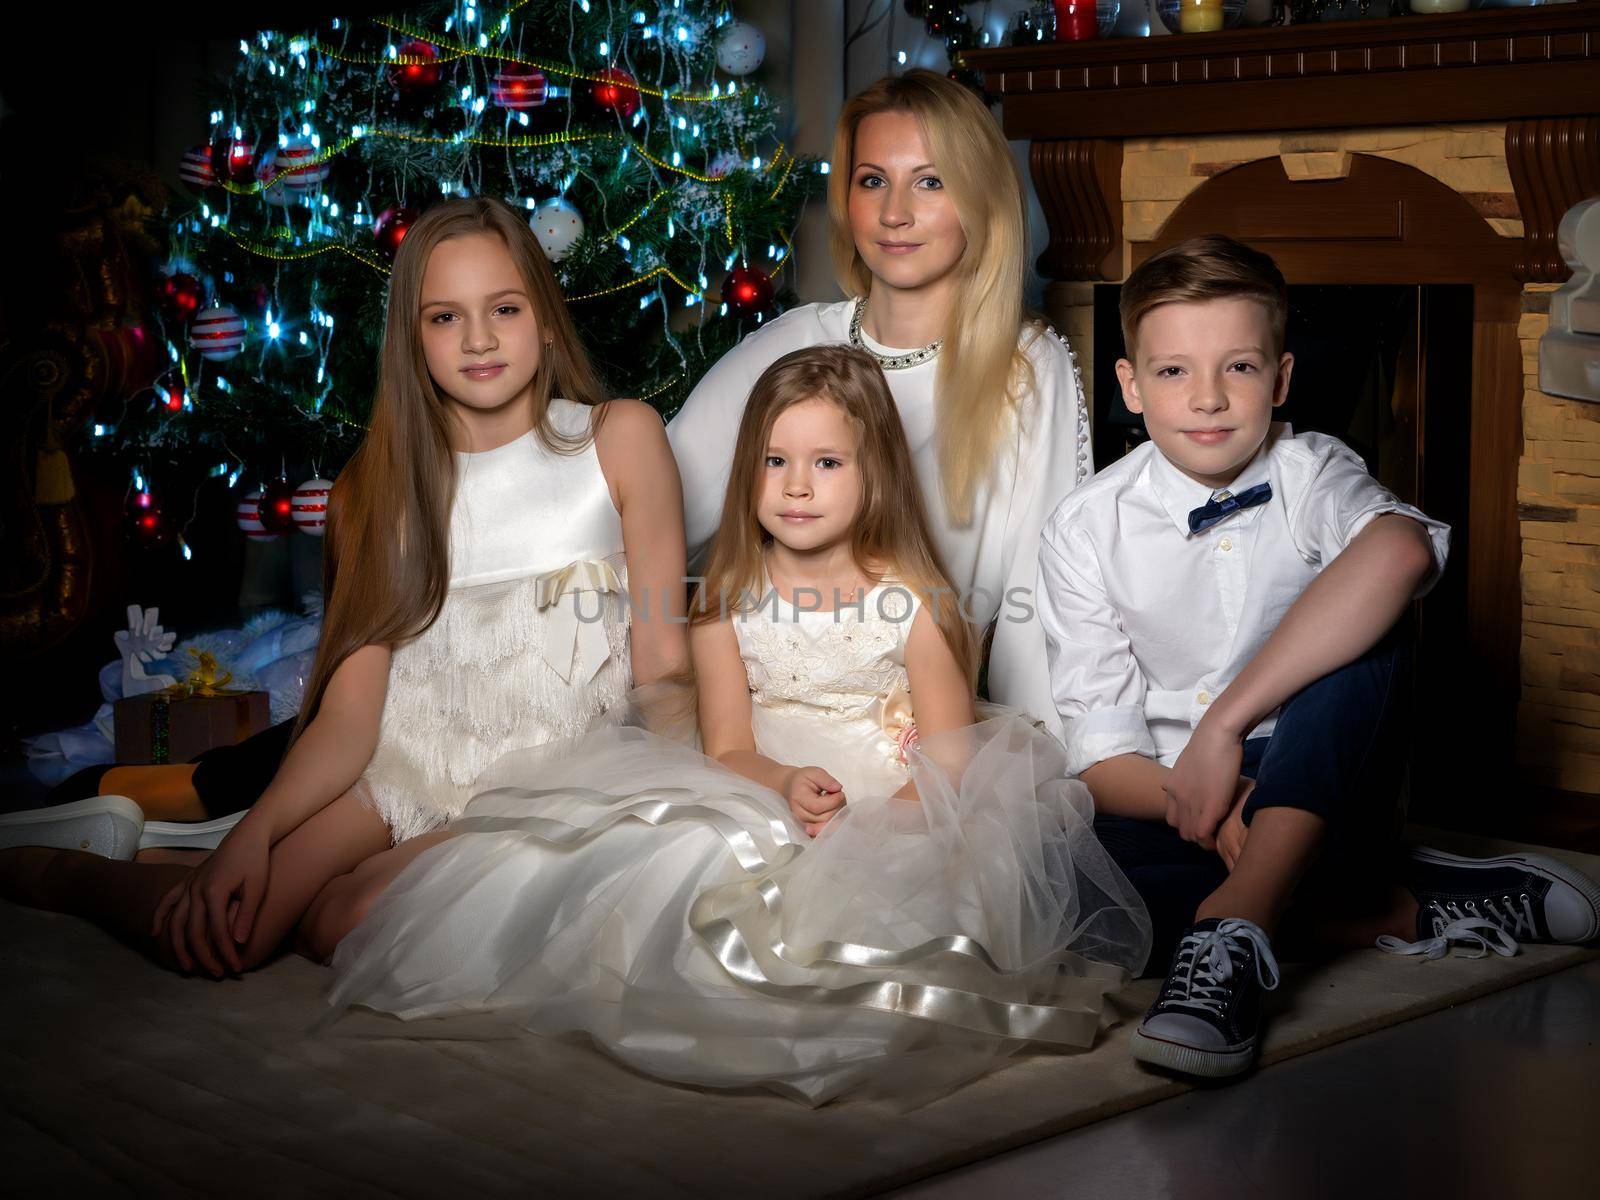 Big happy family with children near the Christmas tree. by kolesnikov_studio